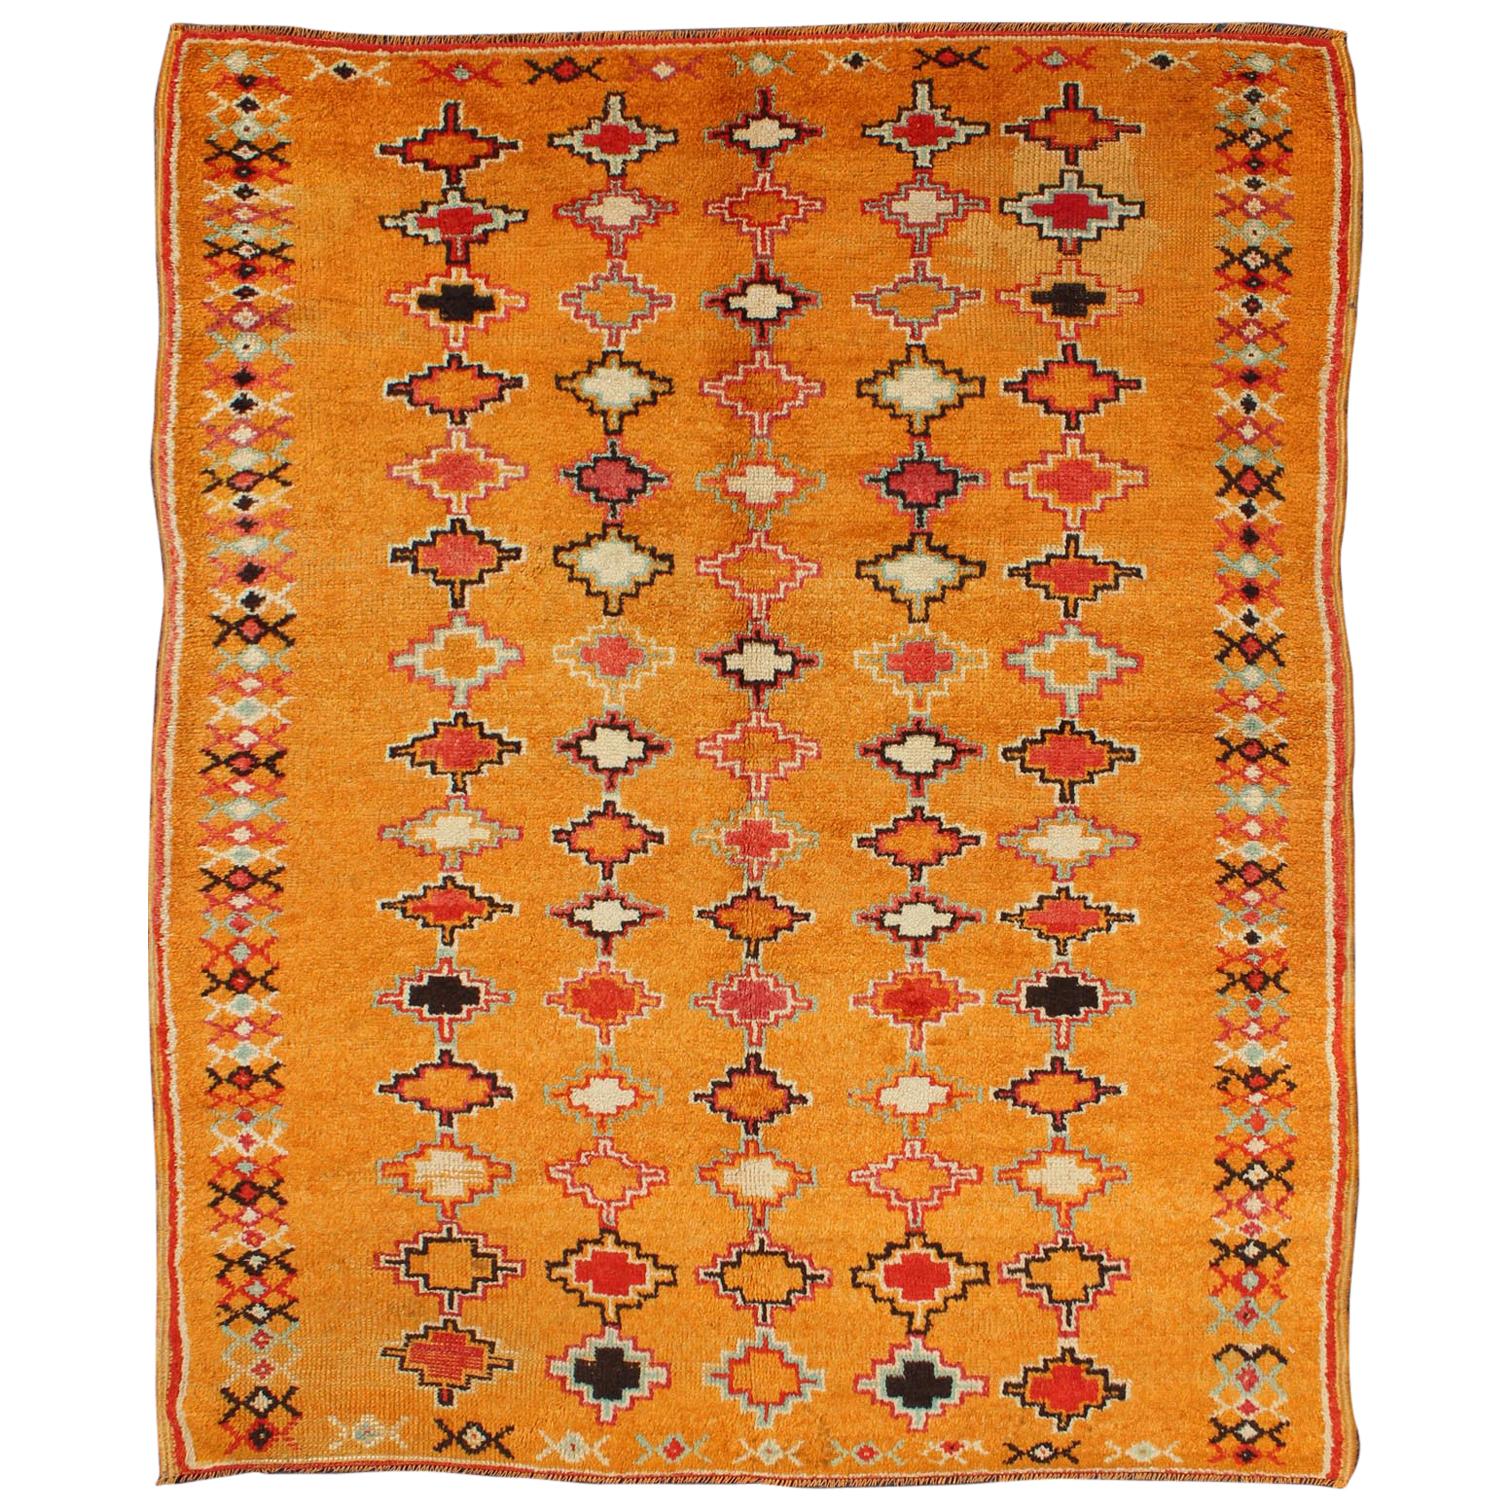 Saffron Colored Antique Moroccan Carpet with Geometric and Diamond Pattern 